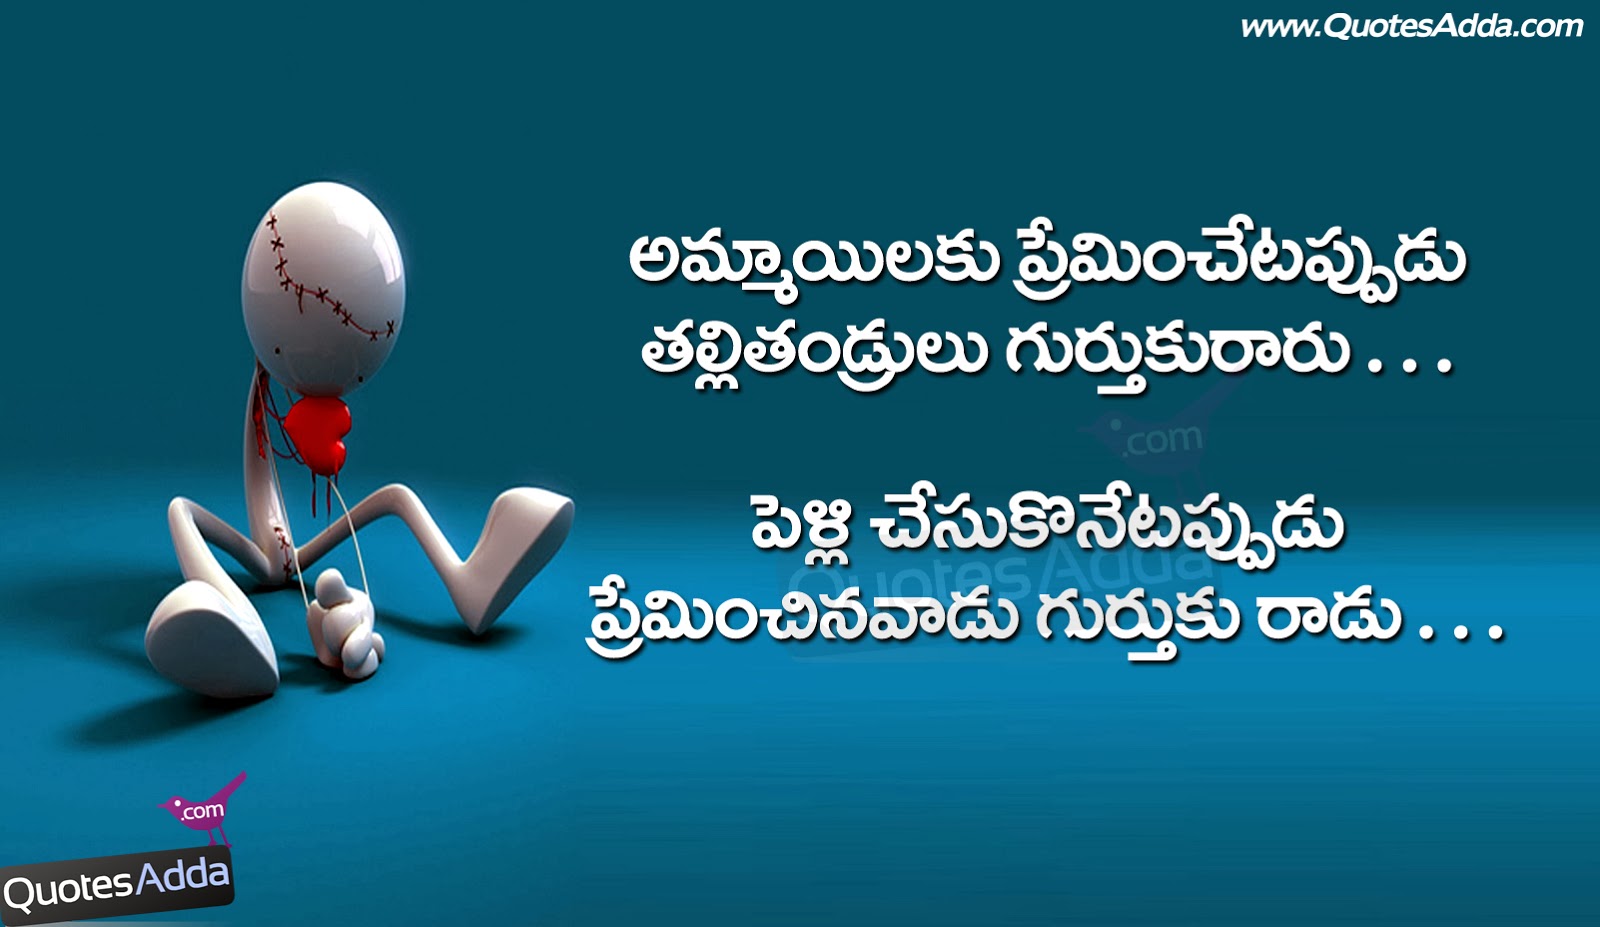 Telugu Funny Quotes | Funny Love Quotations in Telugu